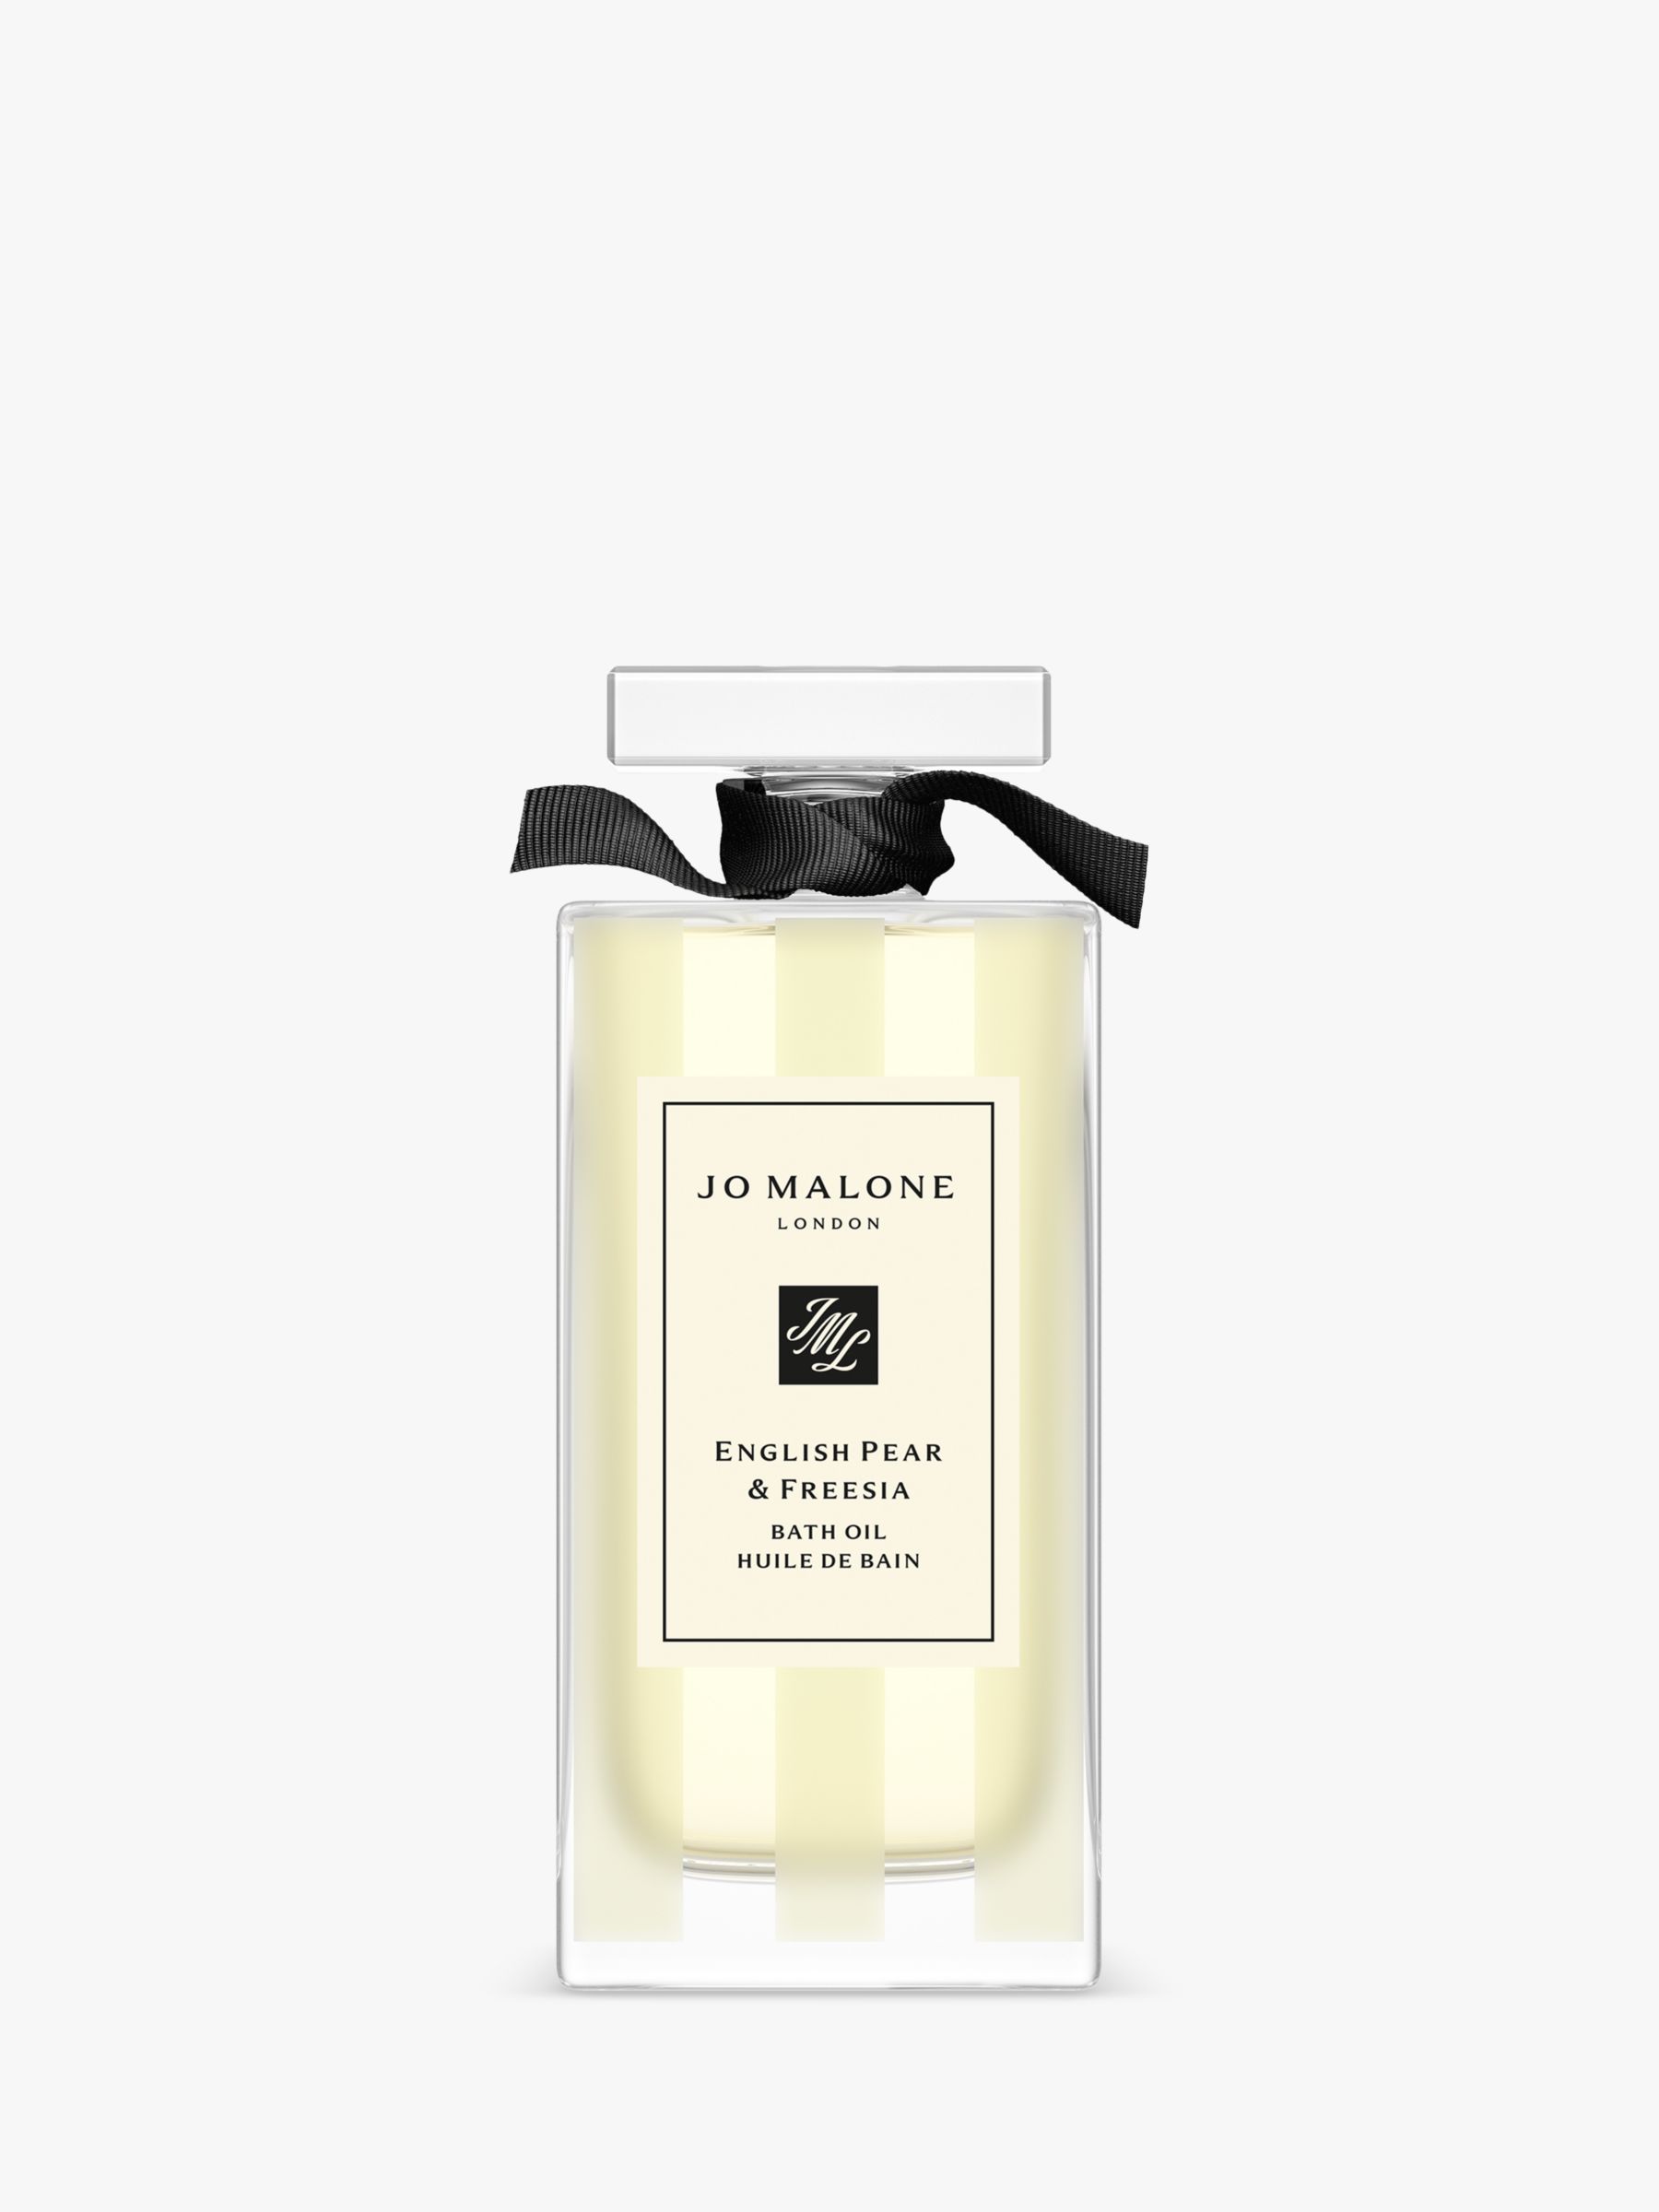 Jo Malone London English Pear & Freesia Bath Oil, 30ml 1